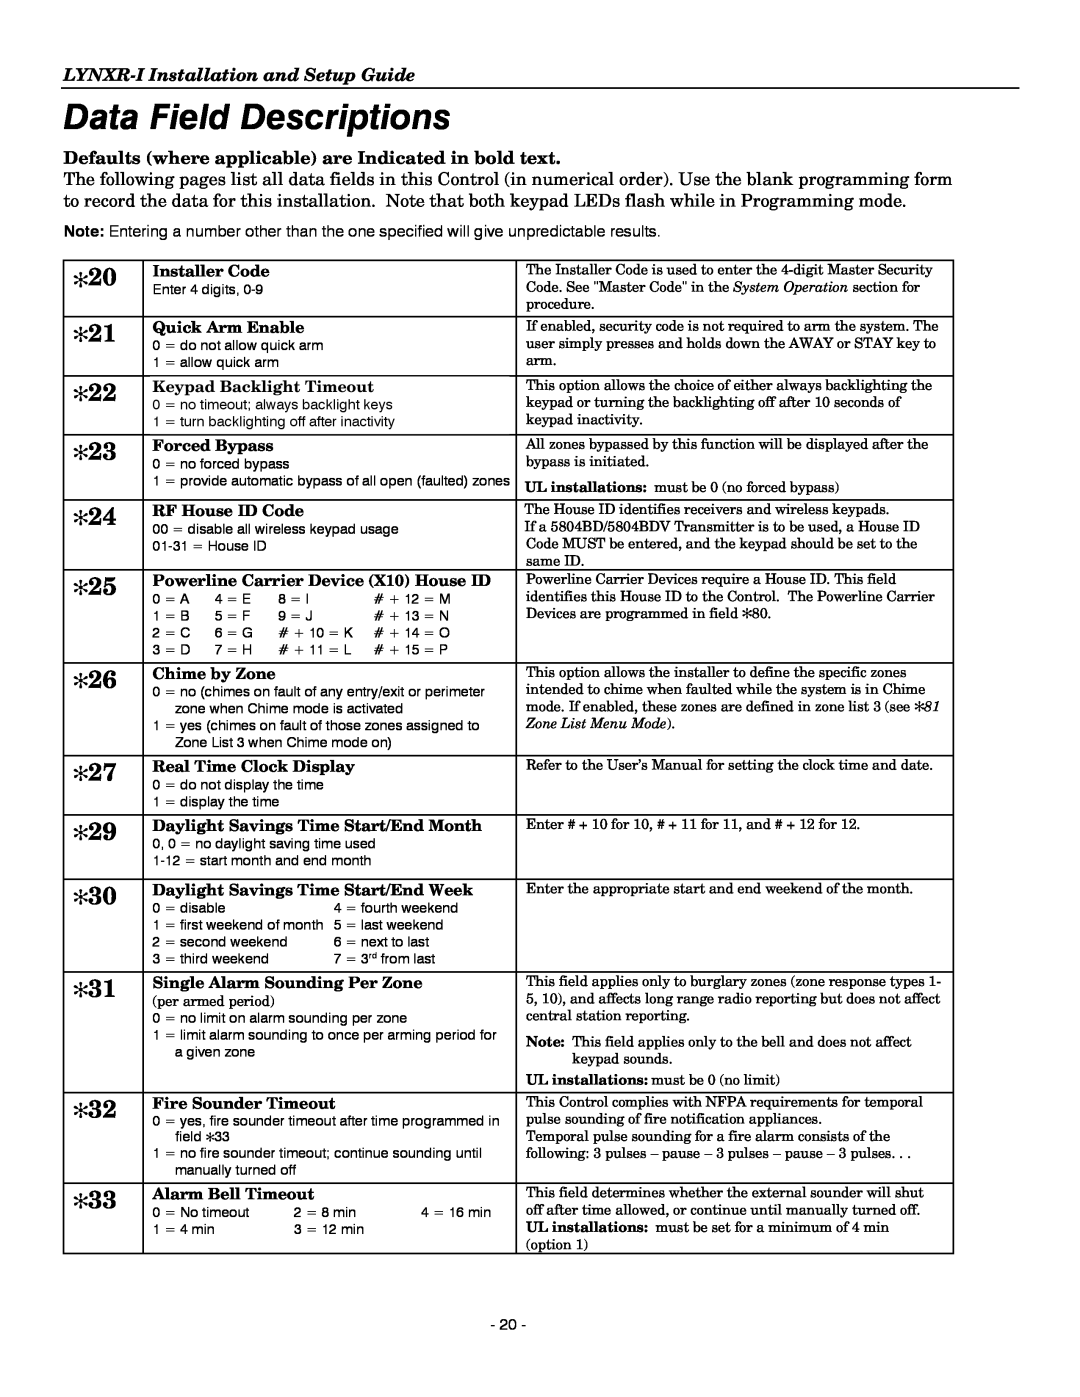 Honeywell K14114 3/06 Rev.B setup guide Data Field Descriptions 